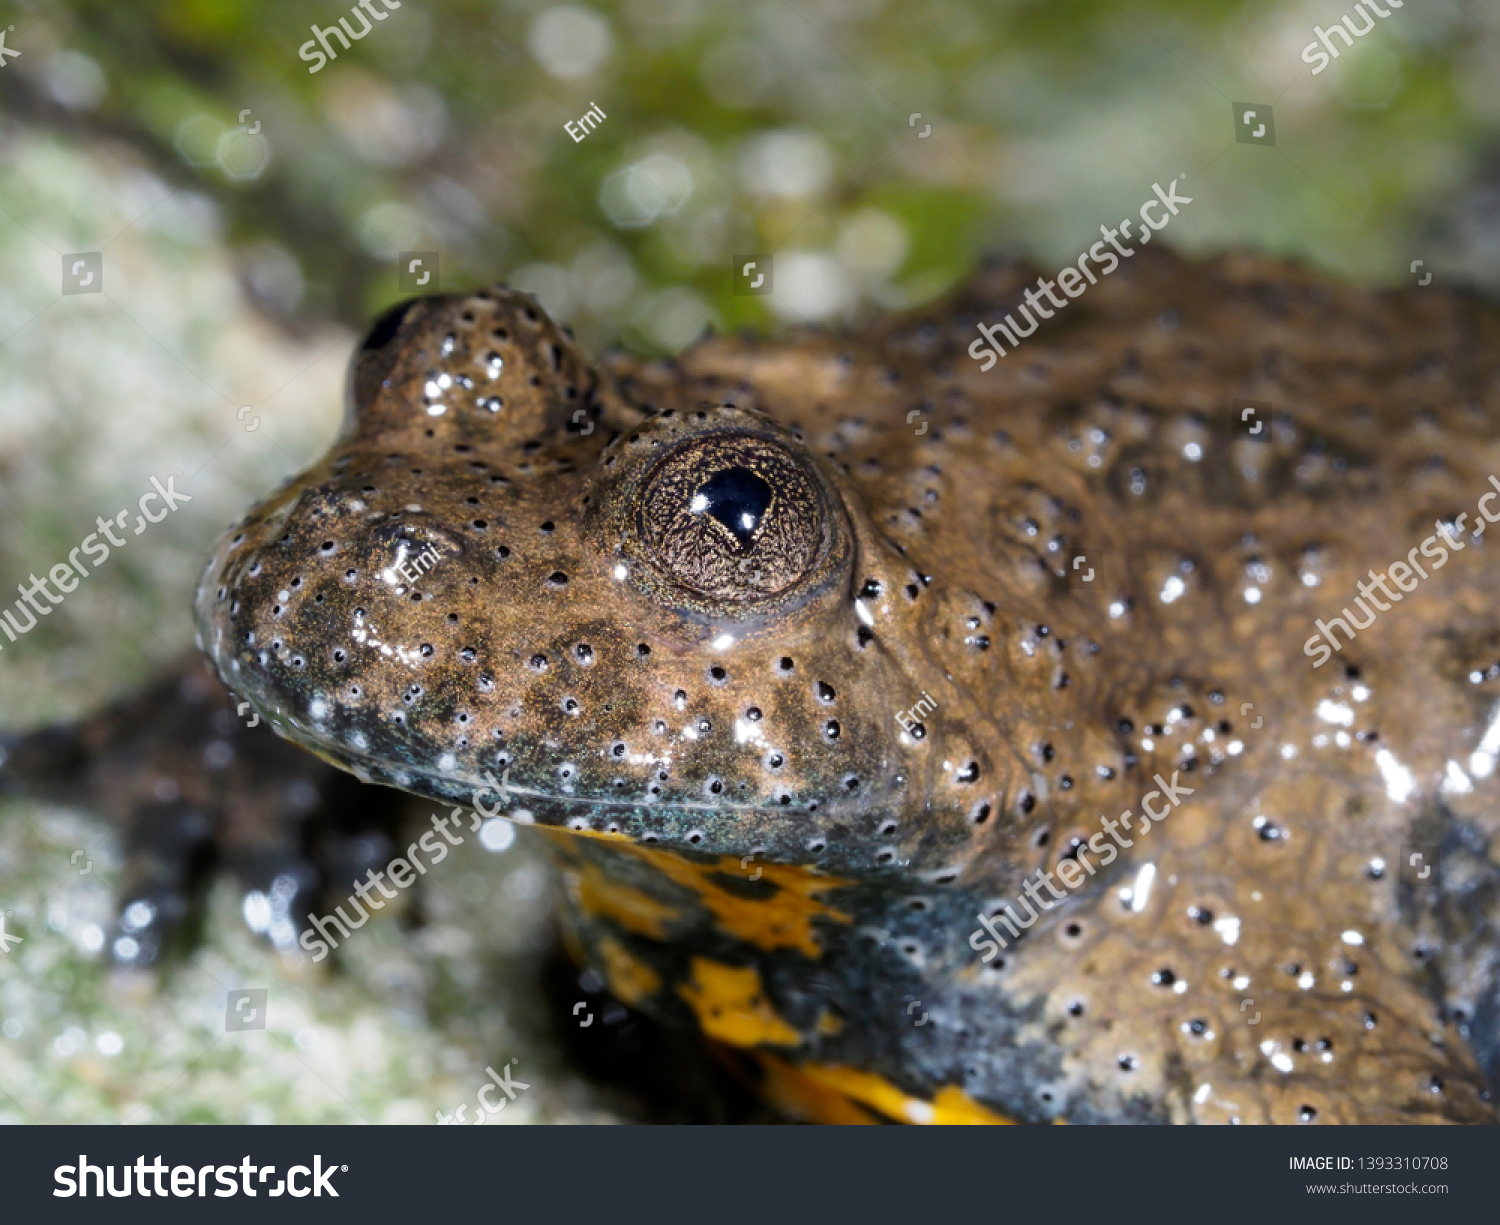 Yellow-bellied toad, Bombina variegata, Bulgaria, April 2019 #1393310708